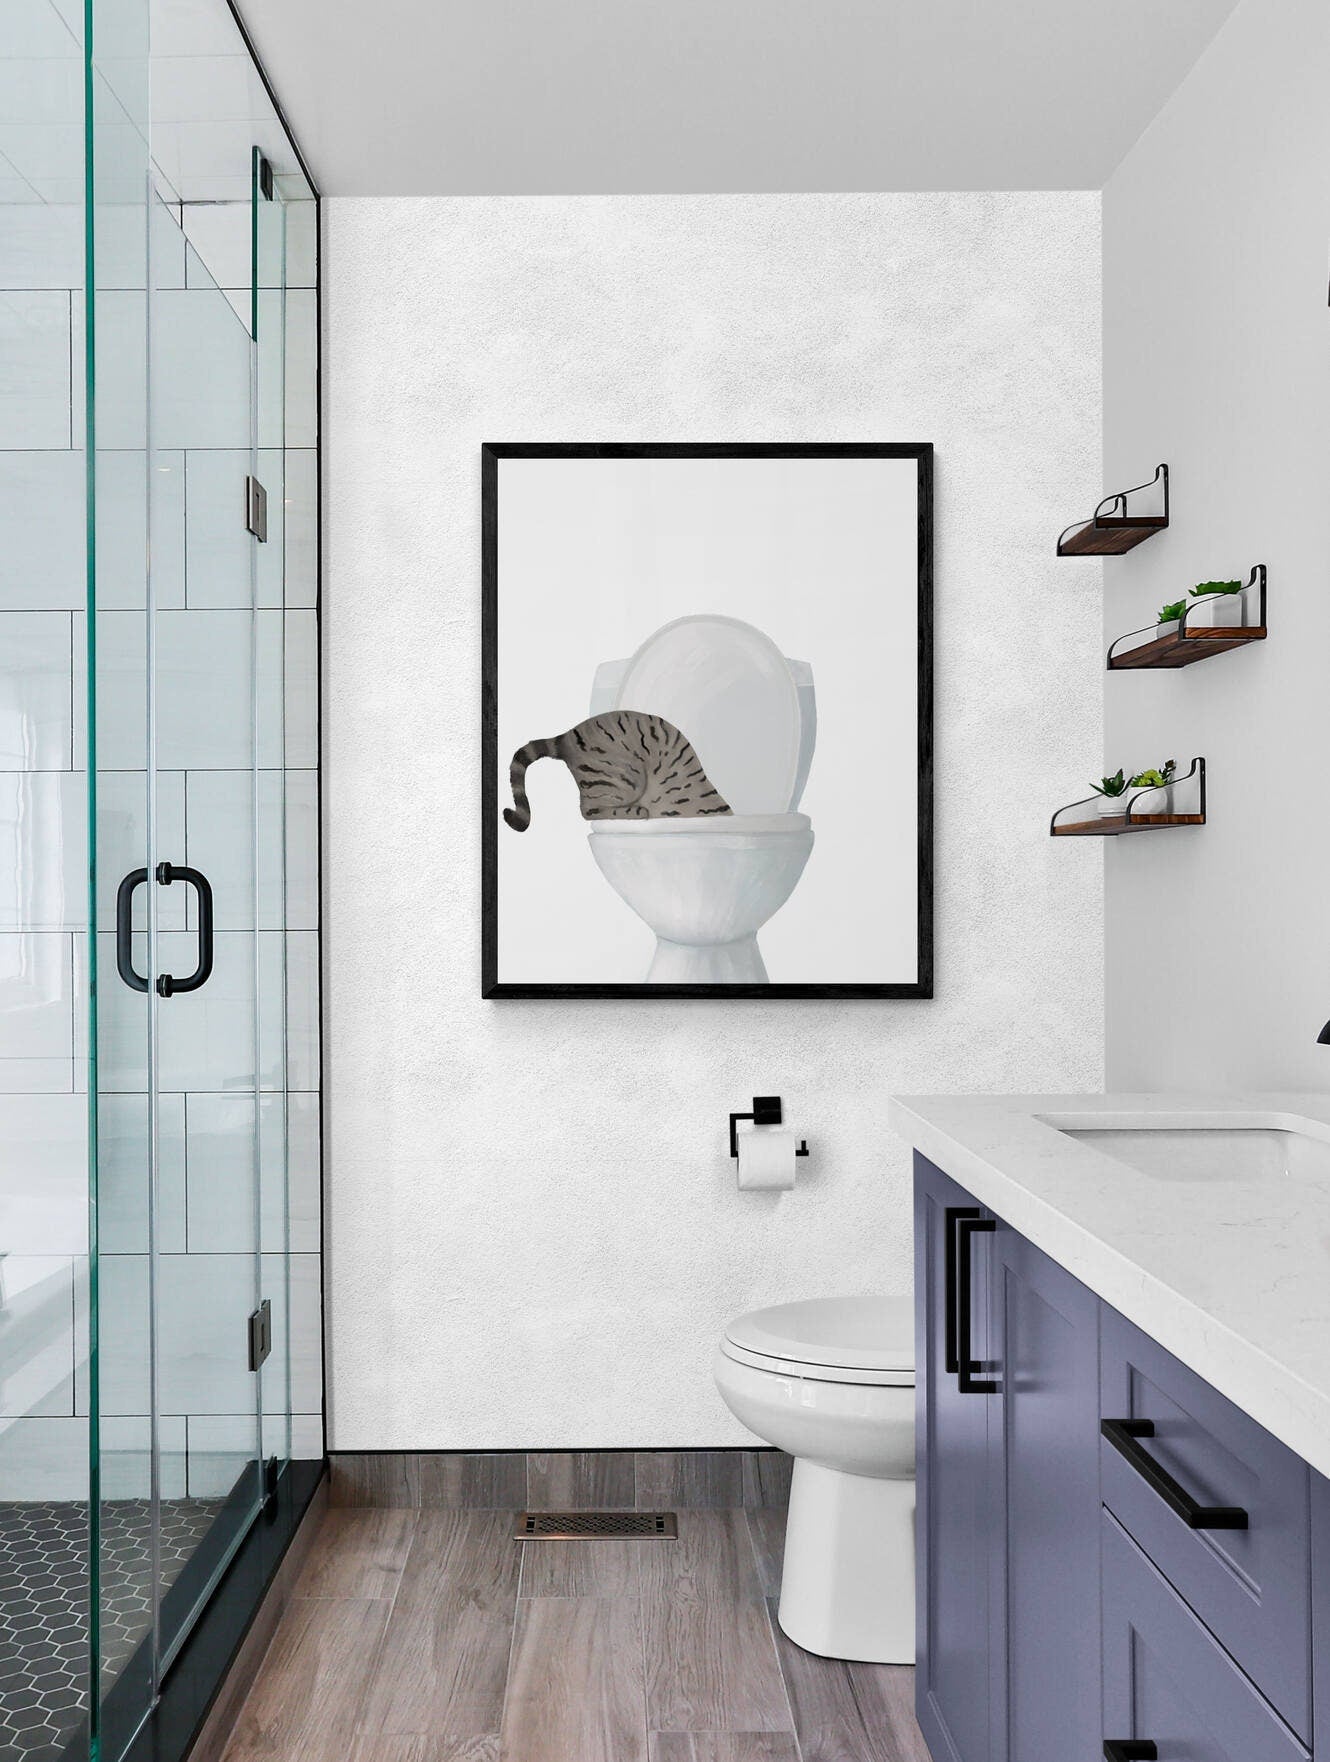 Gray Tabby Cat Drinking Water From Toilet Art, Fat GrayTabby Cat Print, Bathroom Decor, Cat Painting, Kitty Licking Water From Toilet Art,